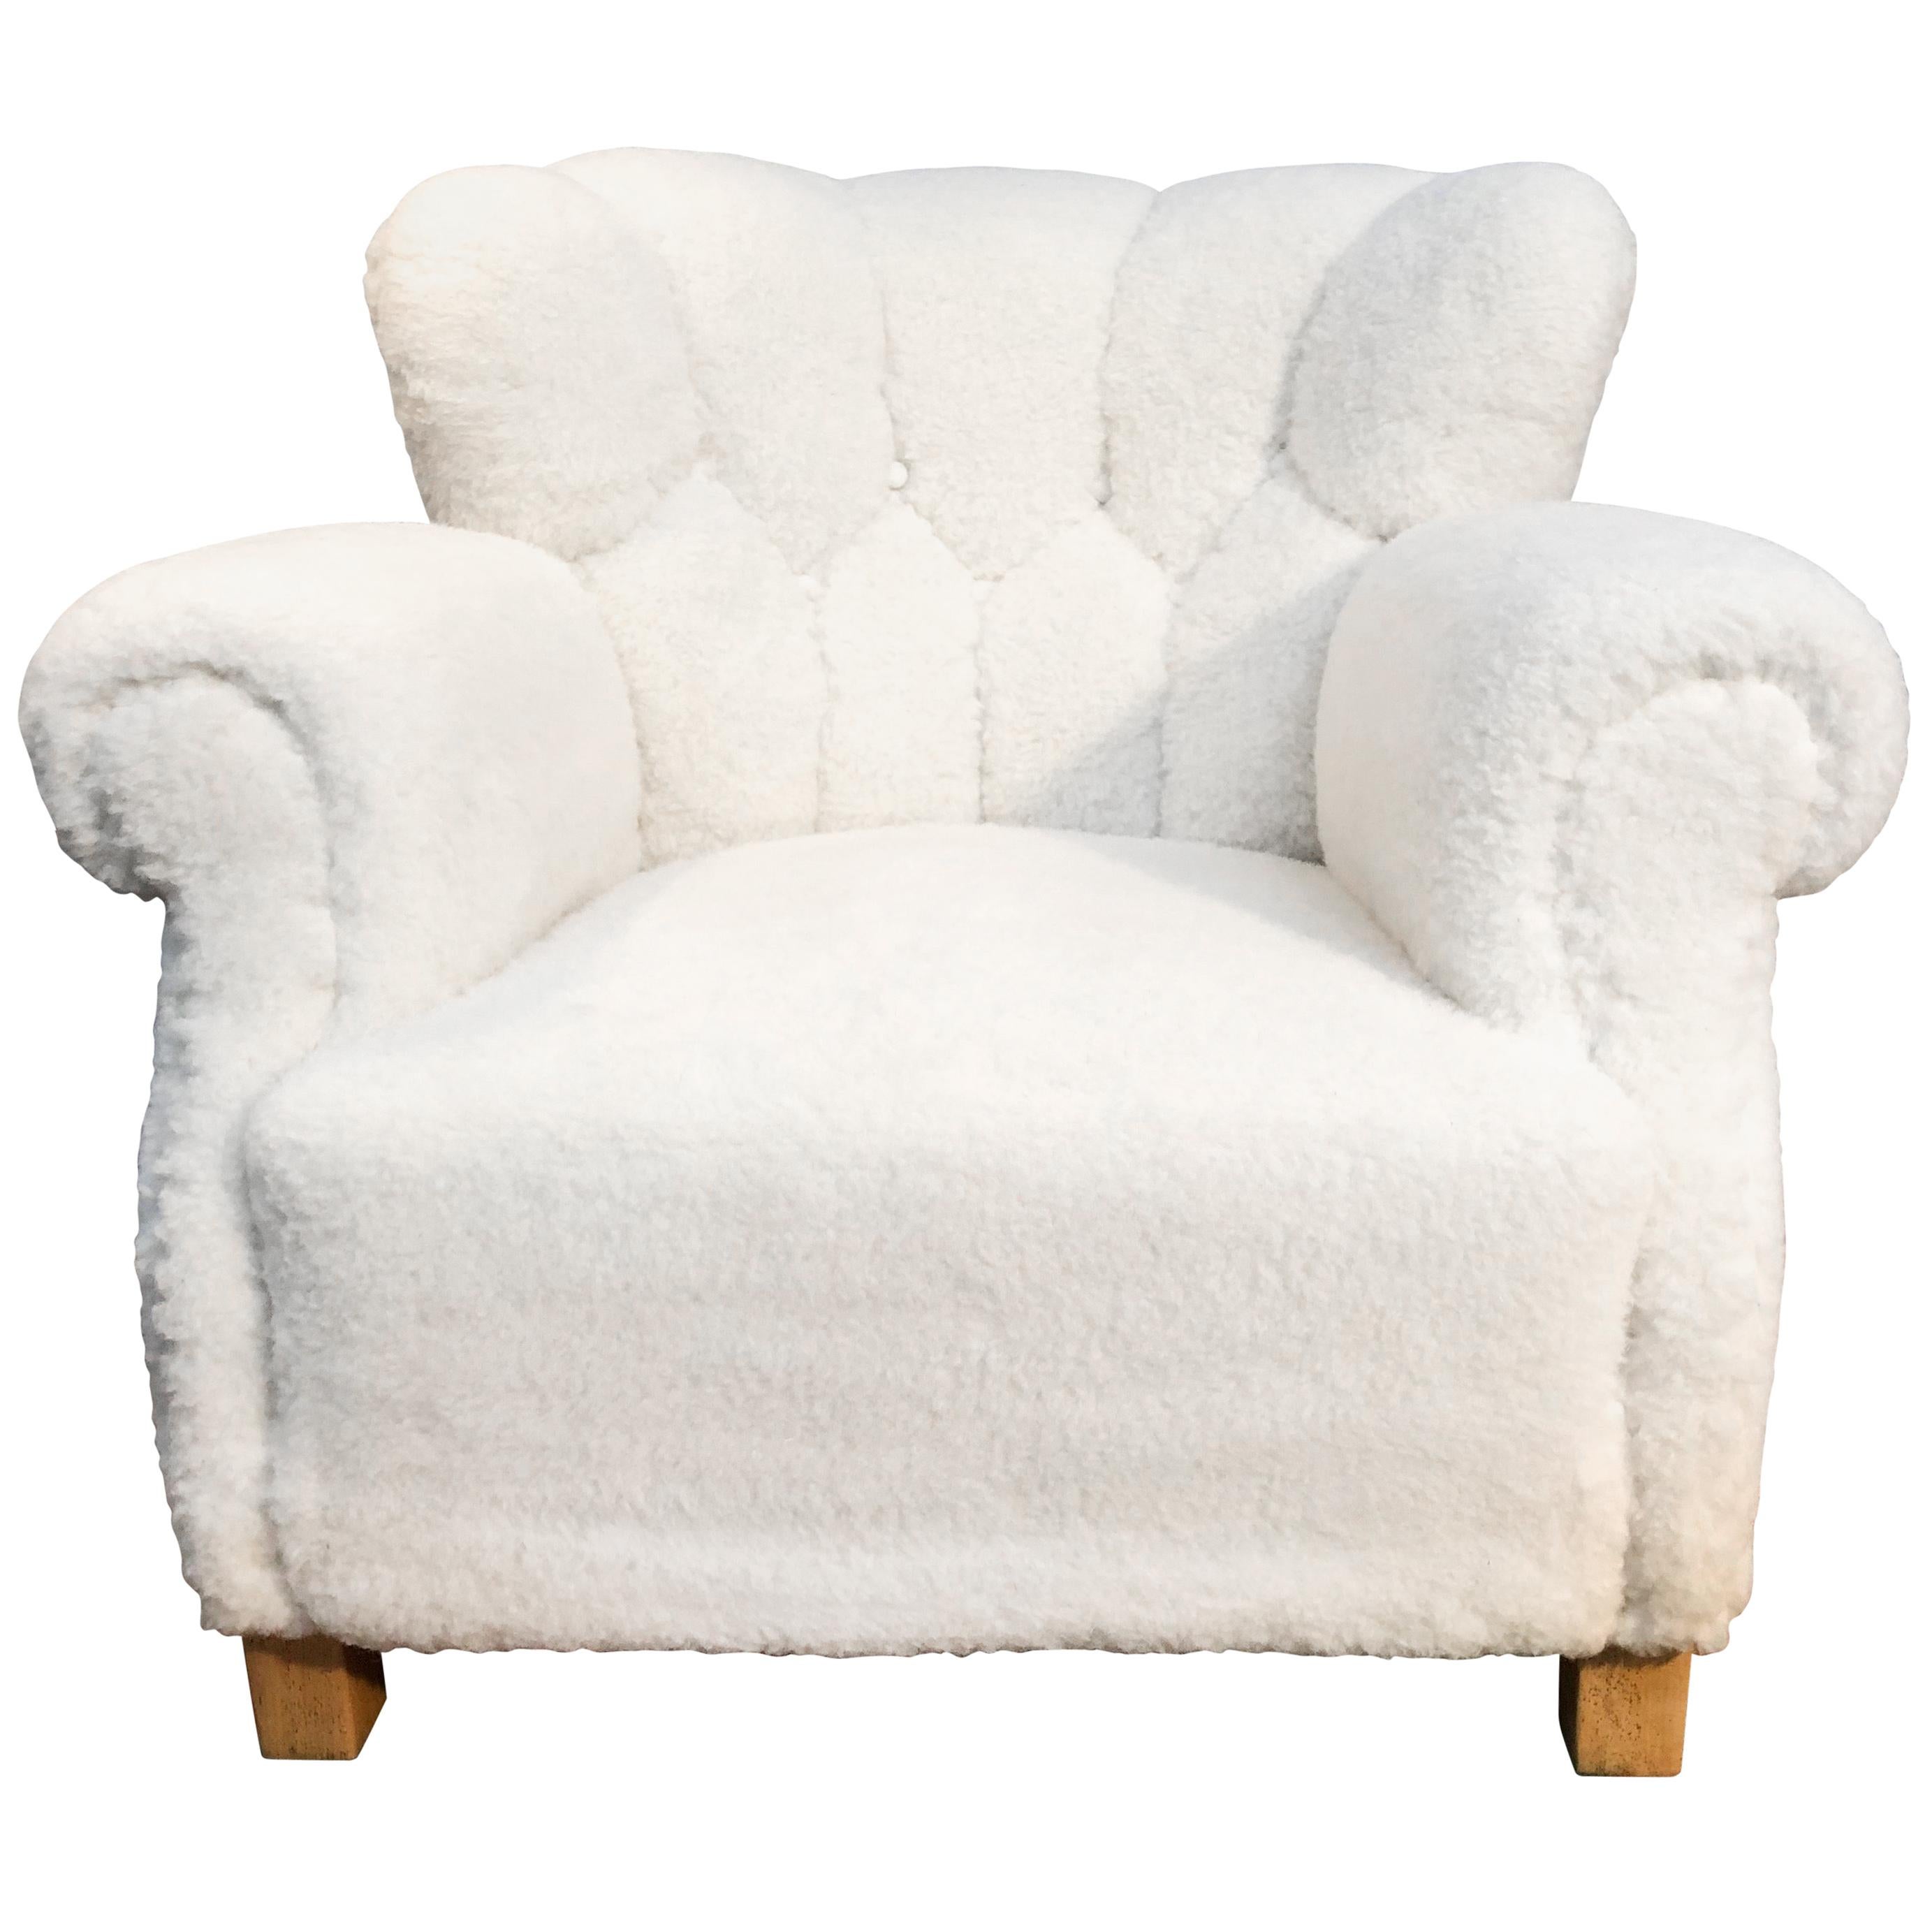 Fritz Hansen of Denmark Lounge Chair Modell 1518b aus den 1940er Jahren in Lambs Wool